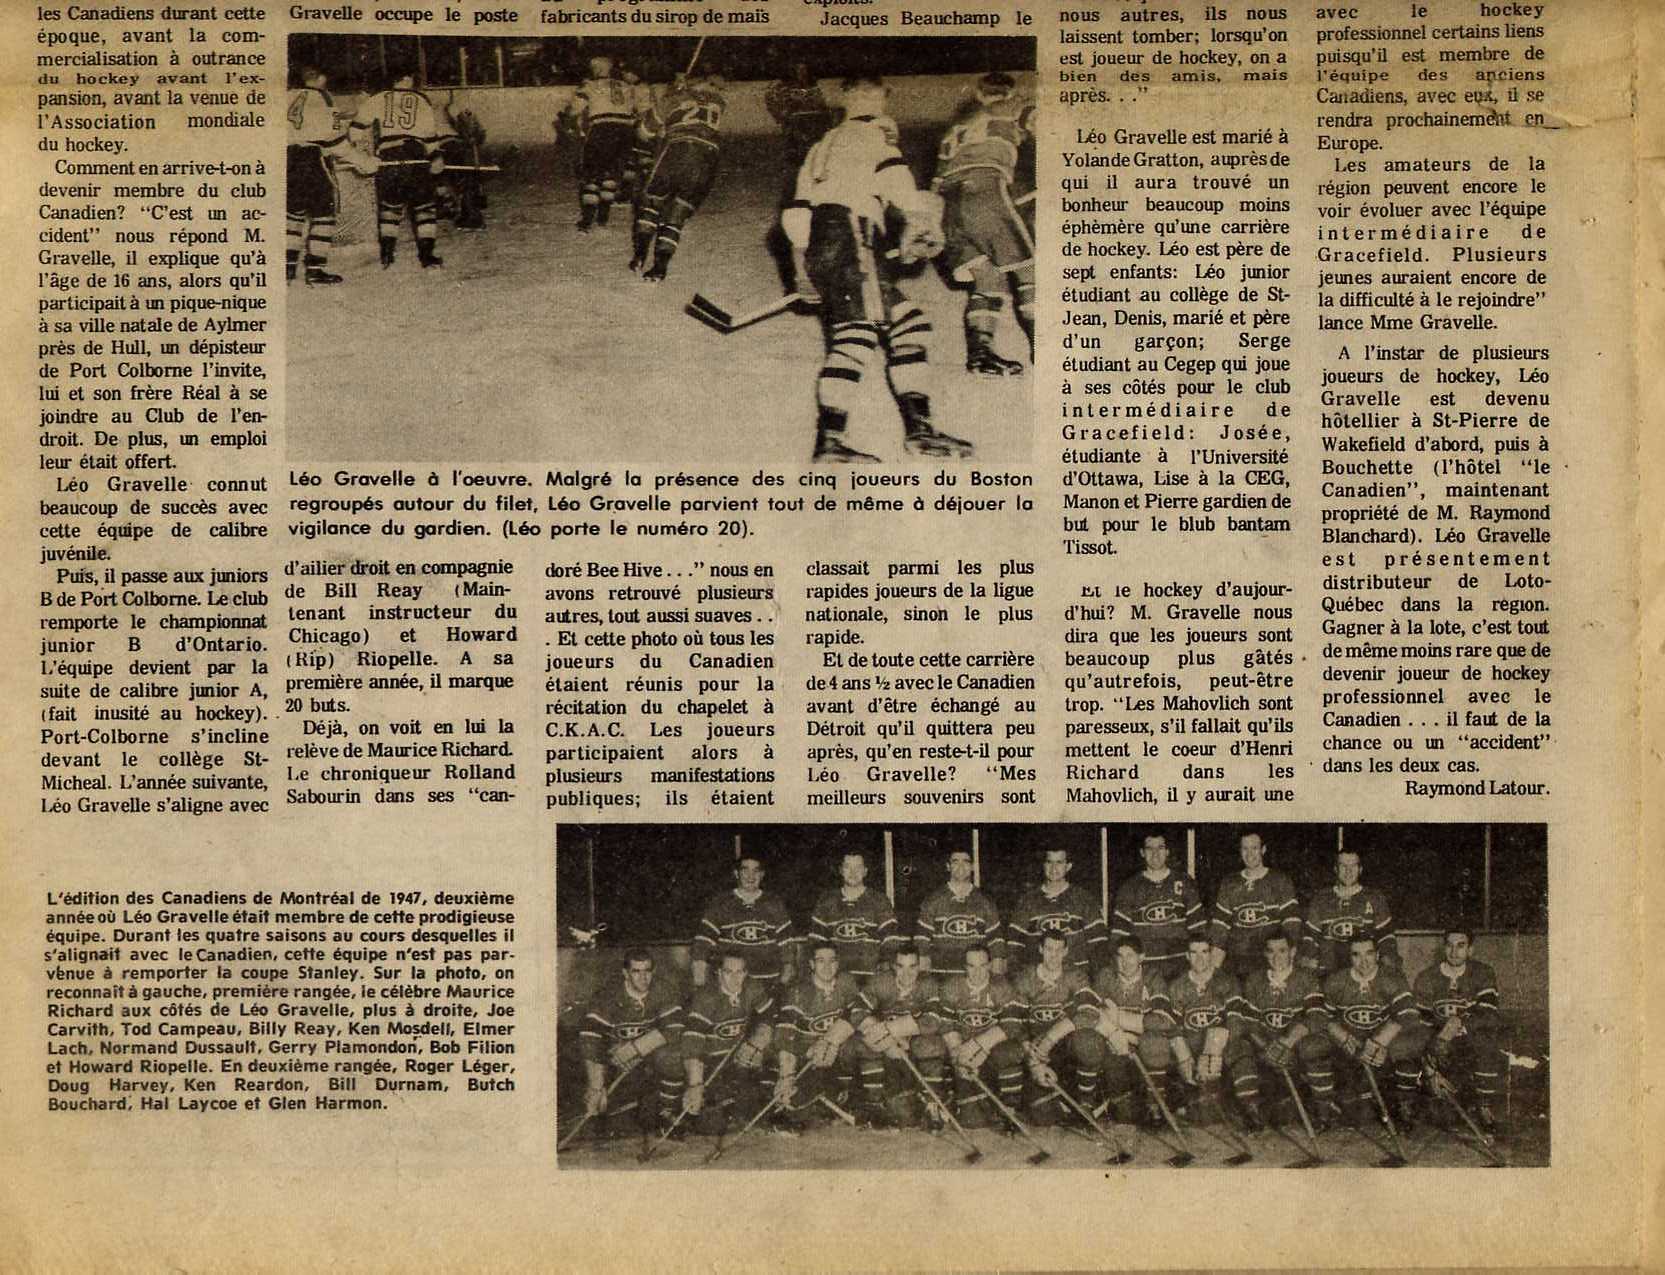 La Gazette de Maniwaki 31 janvier 1974 - pt 2